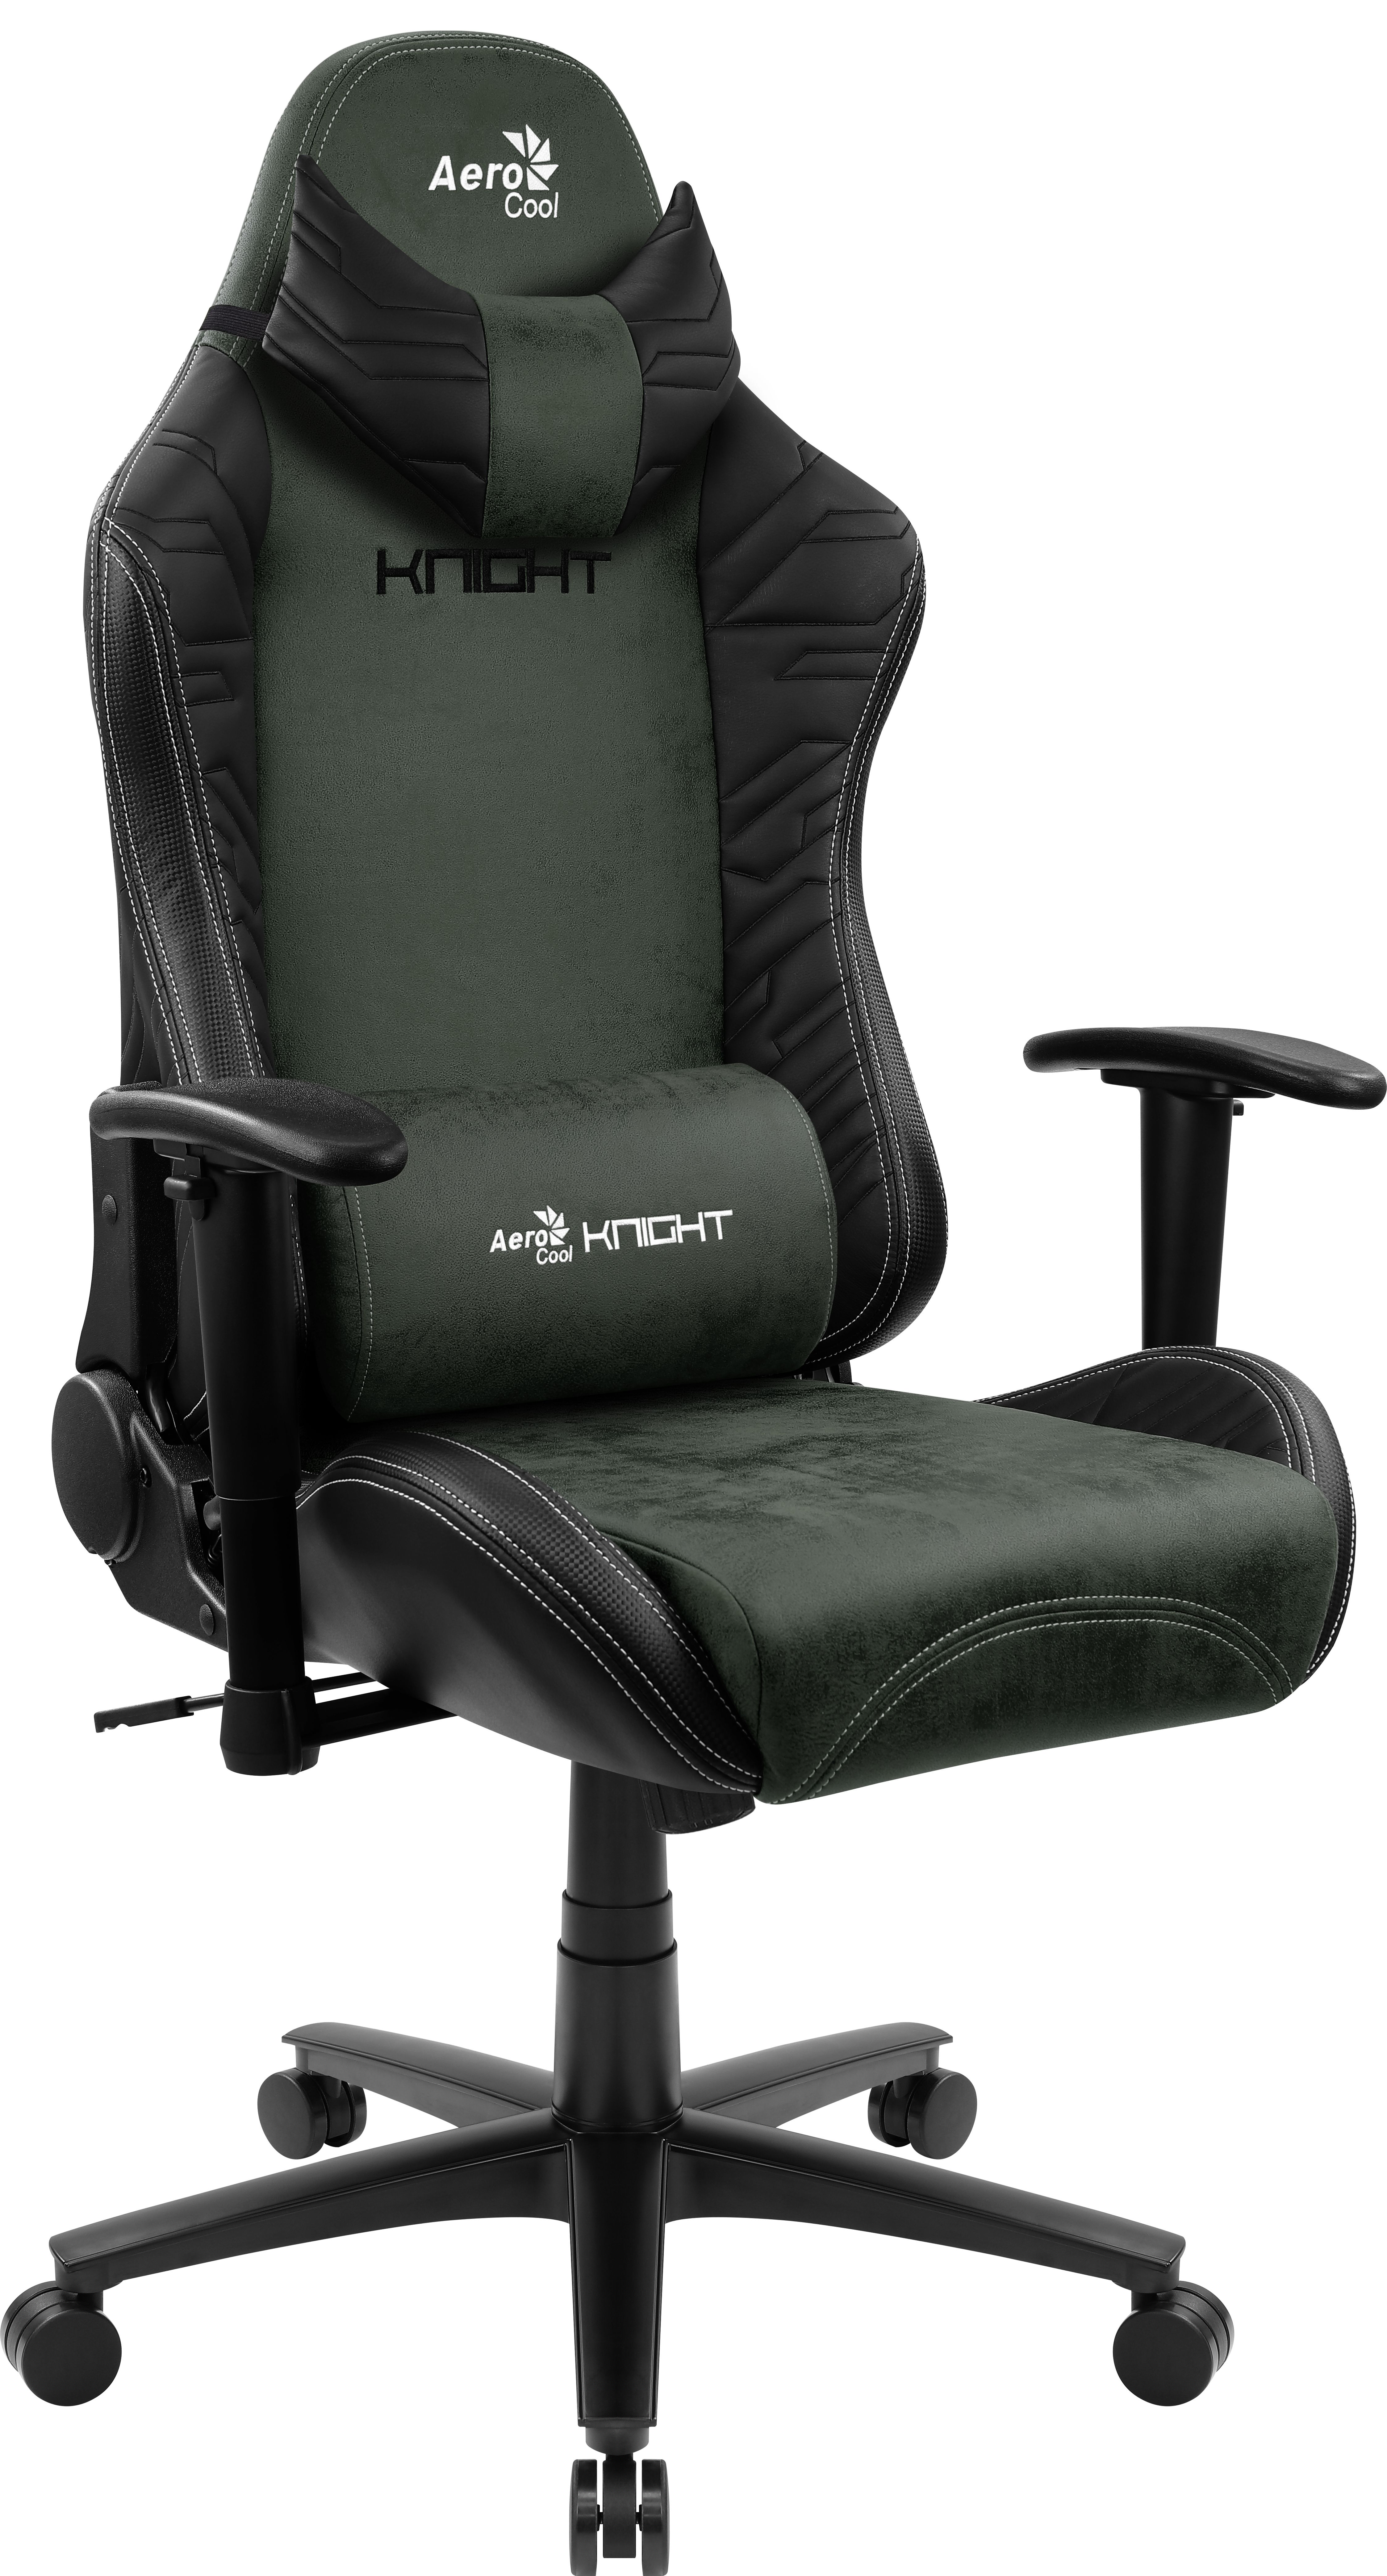 Aerocool KNIGHT AeroSuede Universal gaming chair Black, Green_2